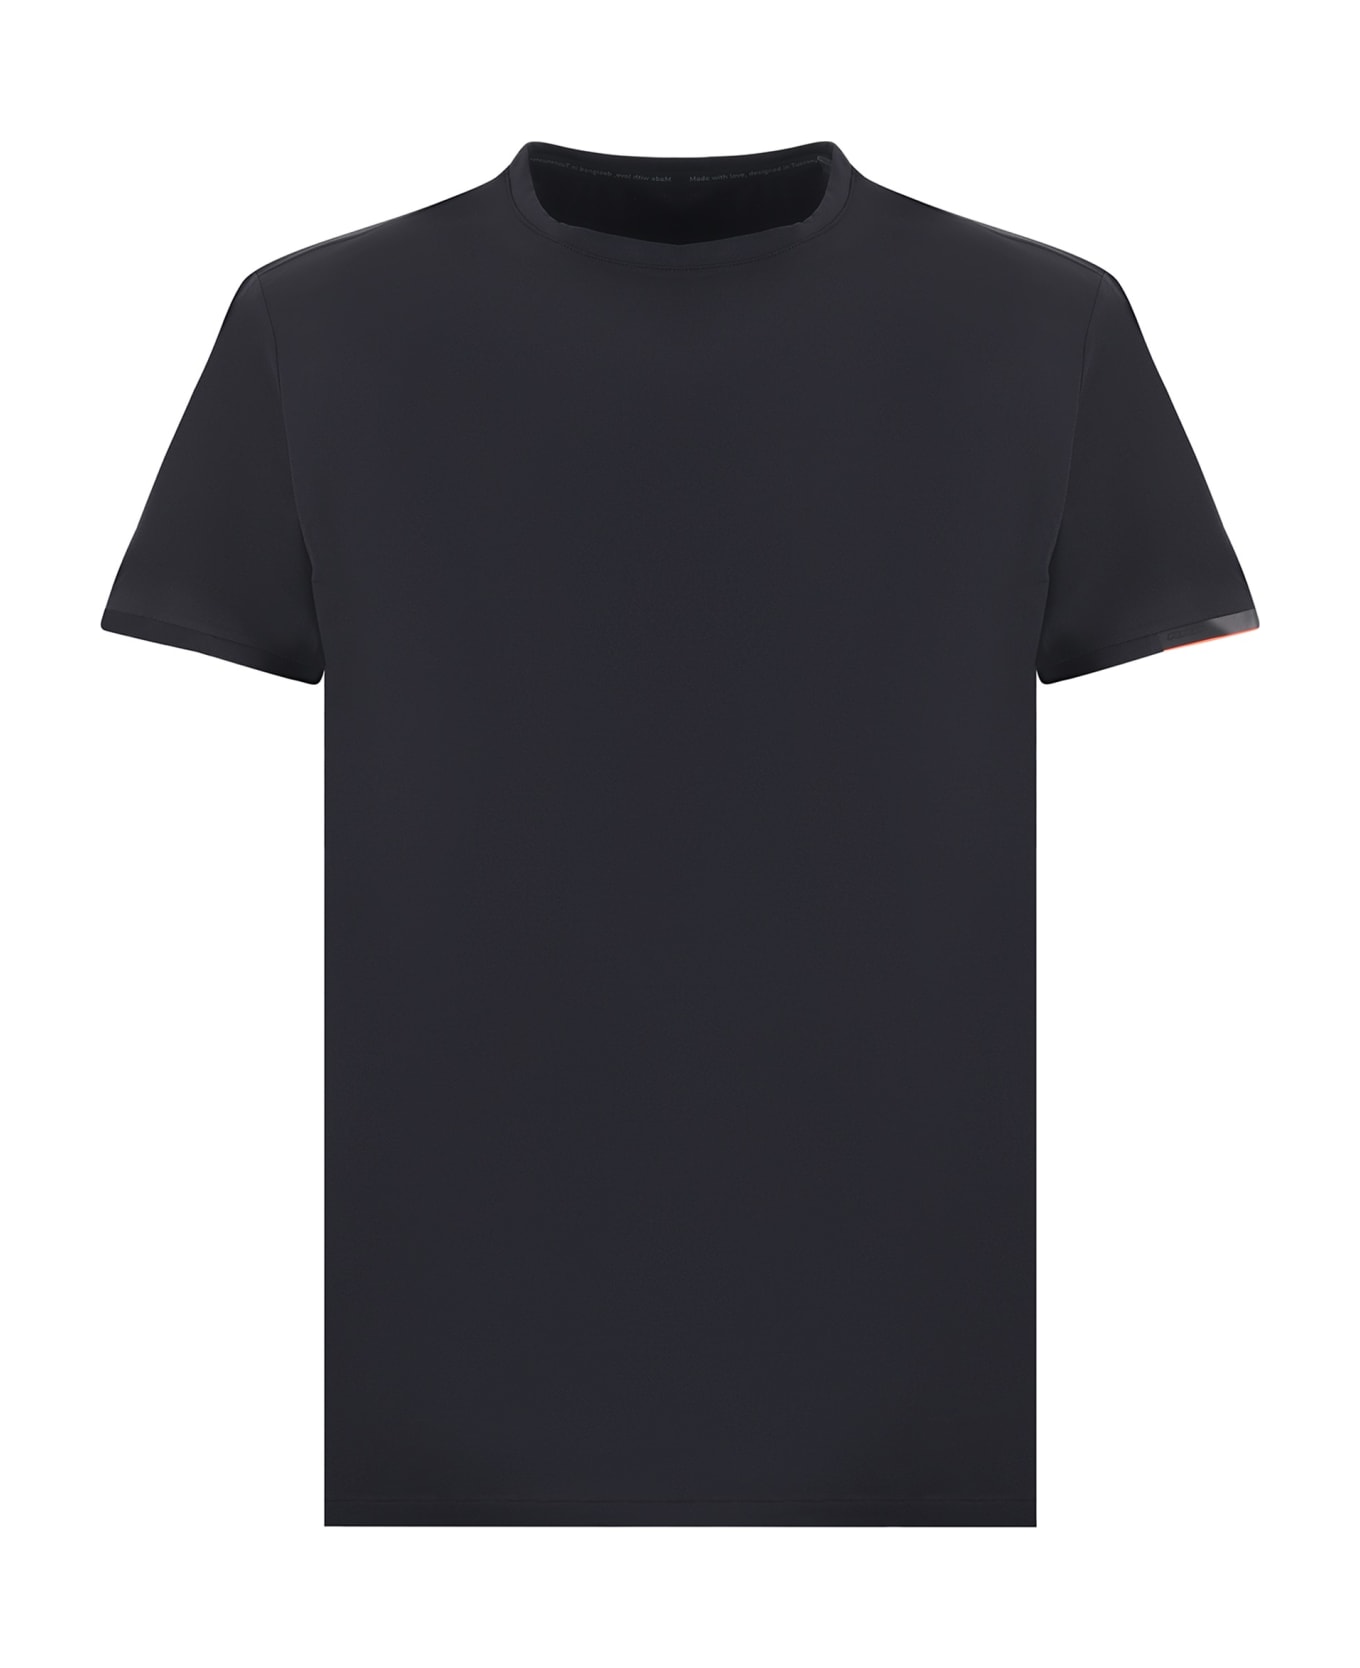 RRD - Roberto Ricci Design Rrd T-shirt - Nero シャツ